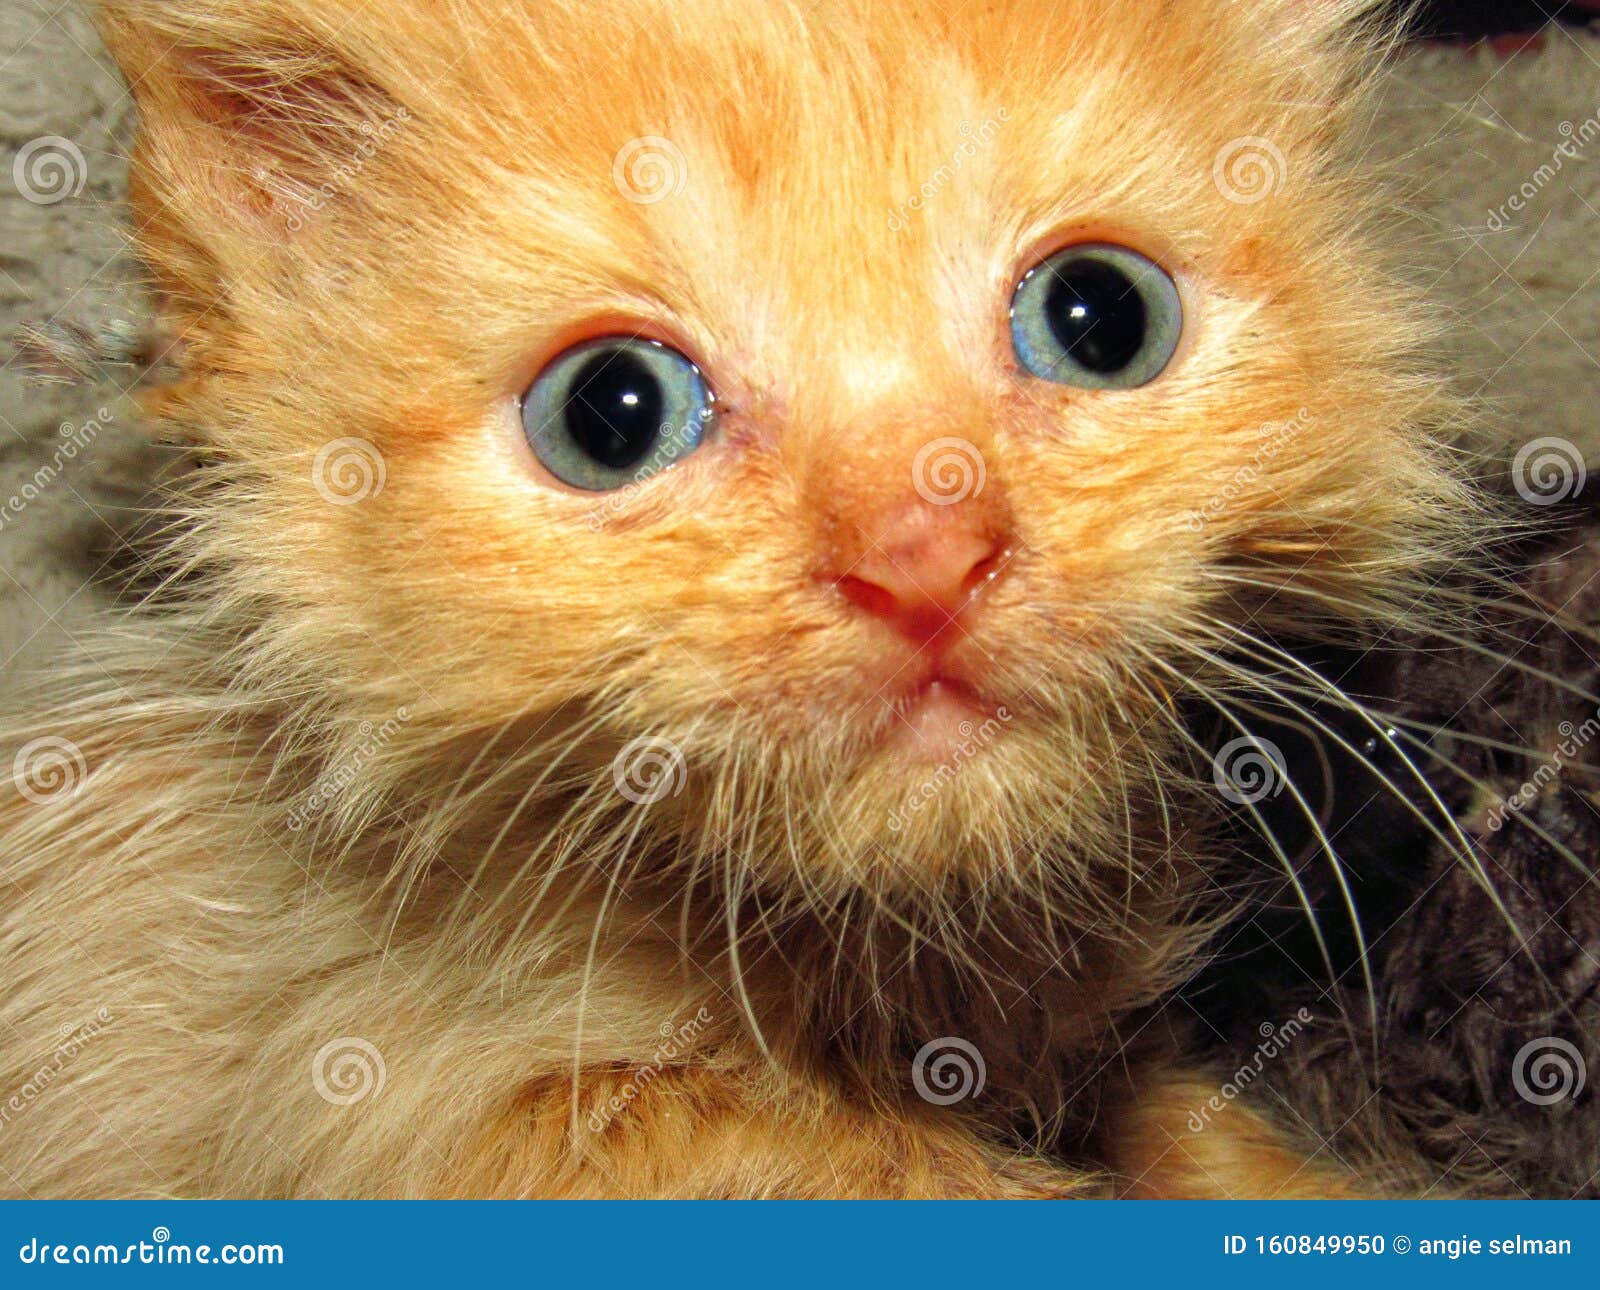 Cute Orange Ginger Tabby Cat Kitten With Blue Eyes Stock Photo Image Of Blue Ginger